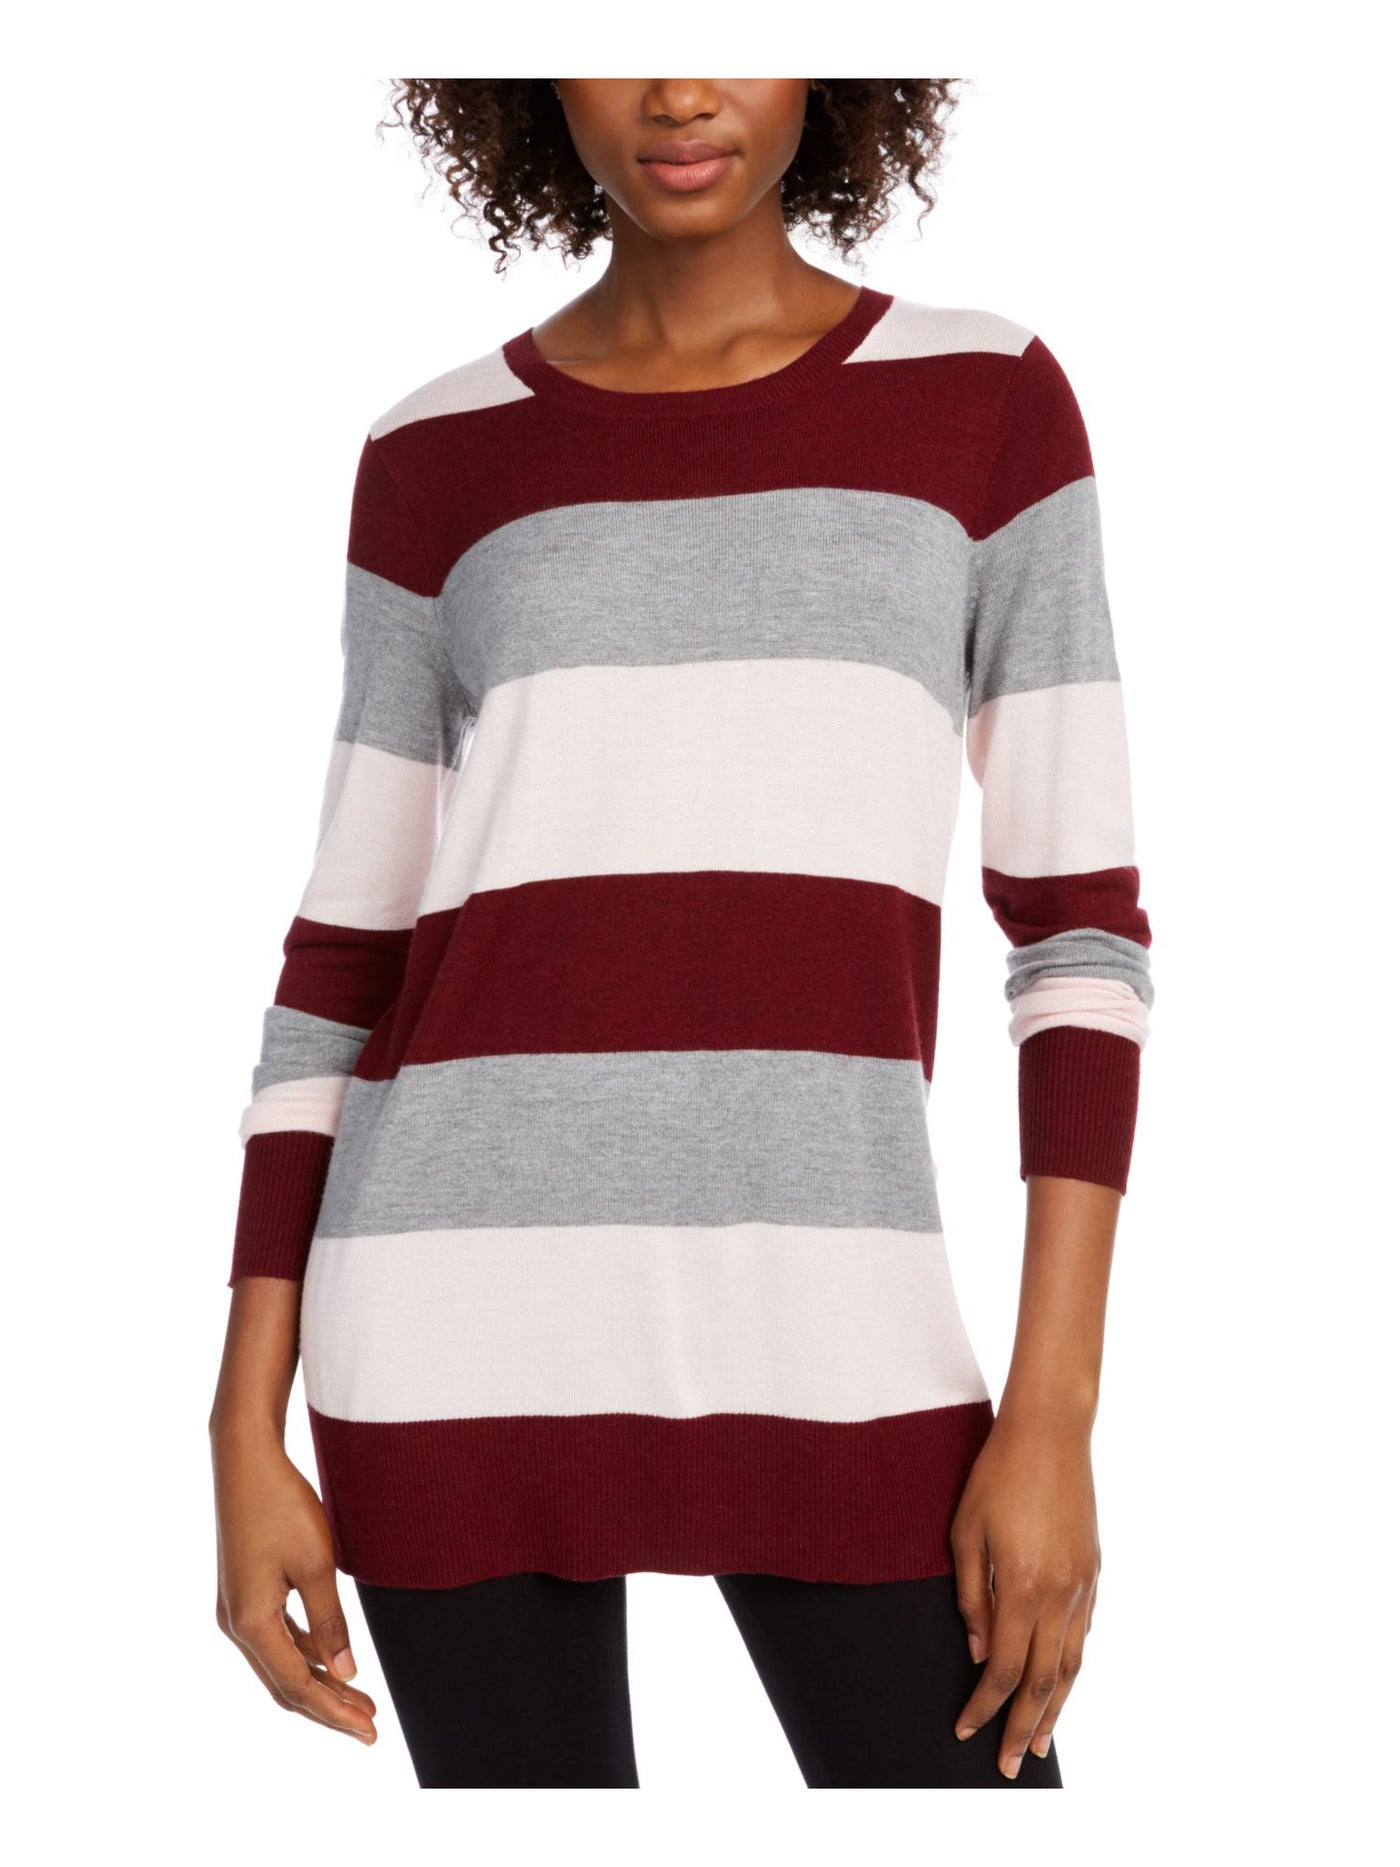 MAISON JULES Womens Burgundy Color Block Long Sleeve Jewel Neck Sweater Size: XS